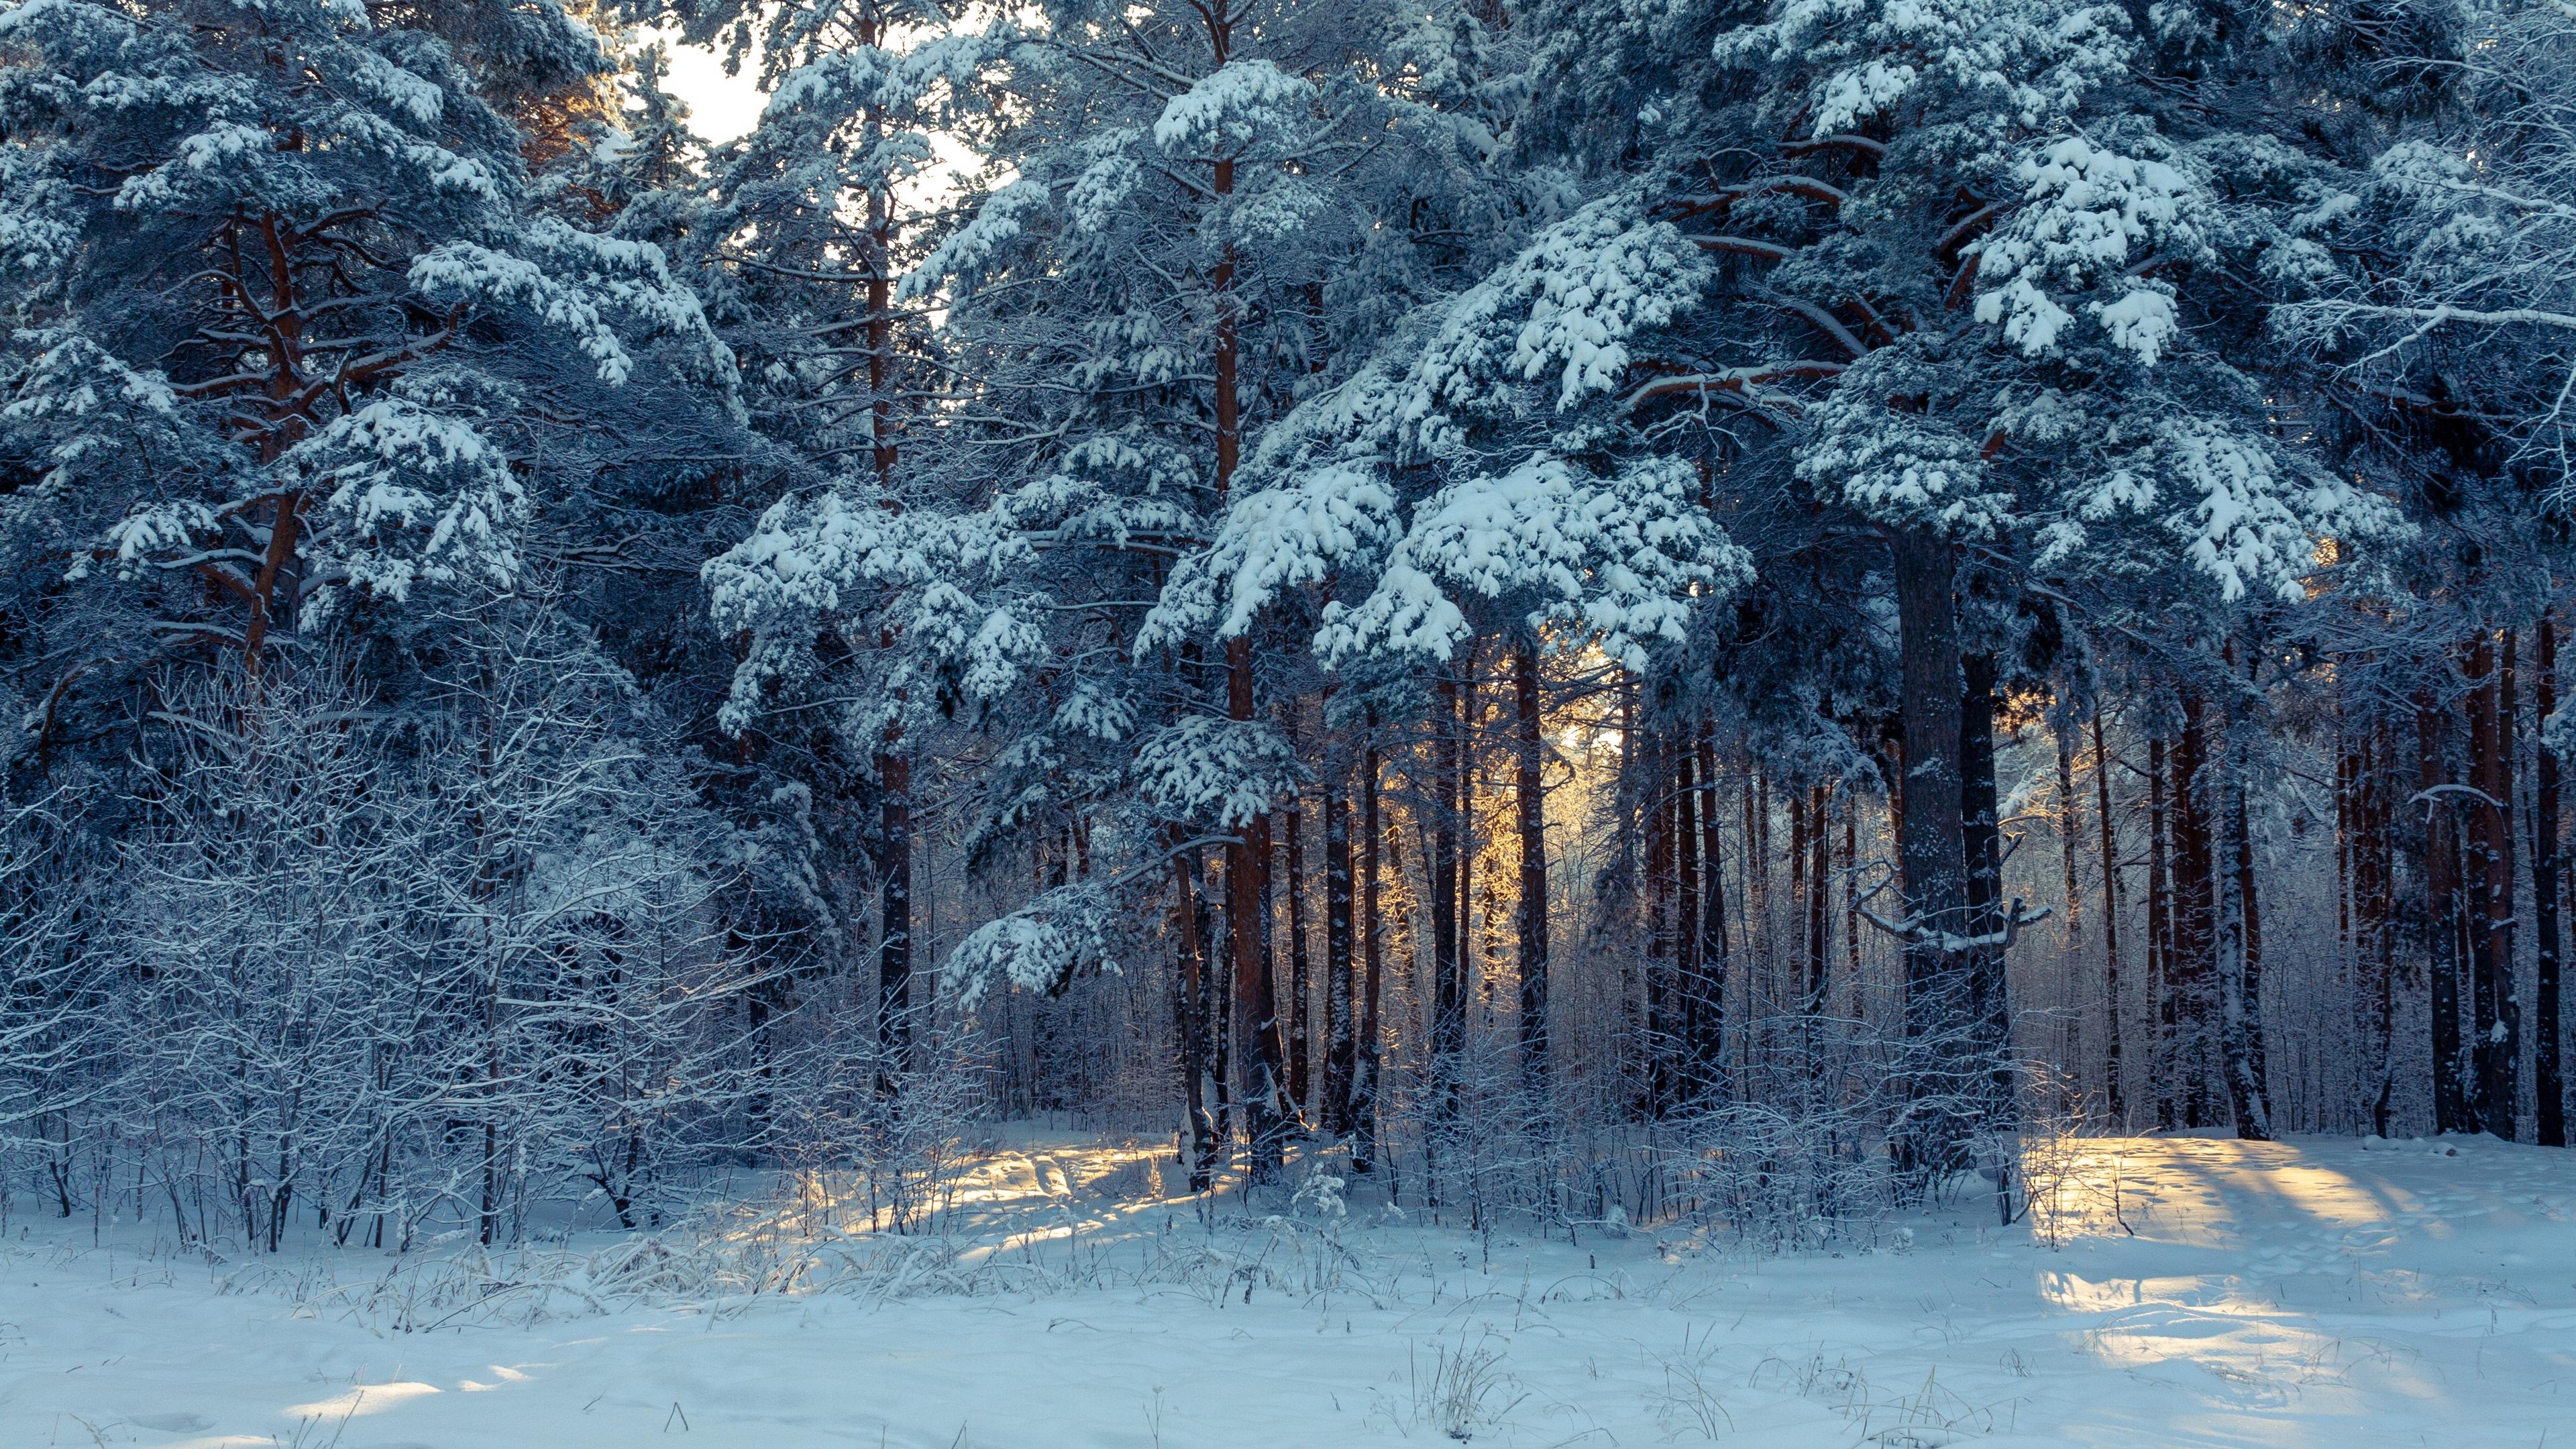 Download wallpaper 3840x2160 forest, winter, snow, trees, winter landscape 4k uhd 16:9 HD background